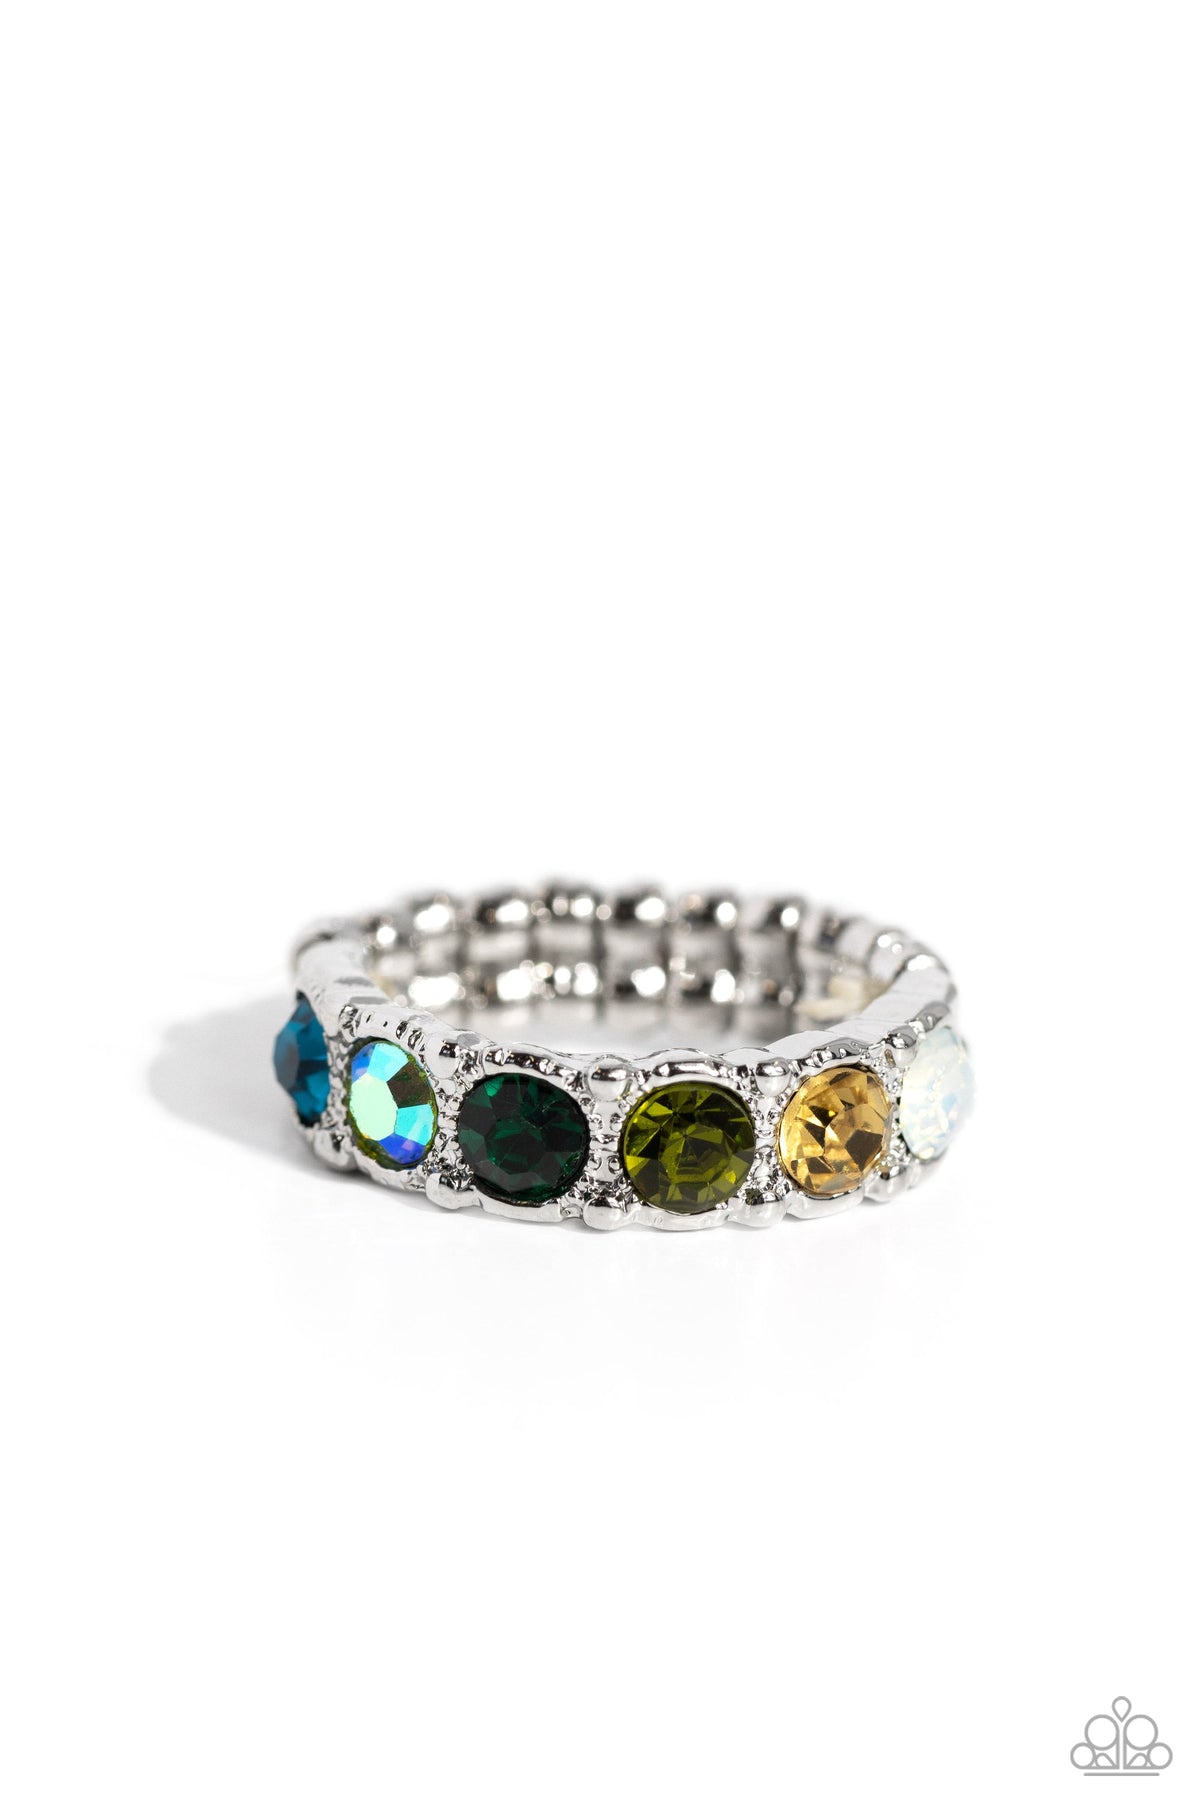 Taming Twilight Green &amp; Multi Rhinestone Ring - Paparazzi Accessories- lightbox - CarasShop.com - $5 Jewelry by Cara Jewels